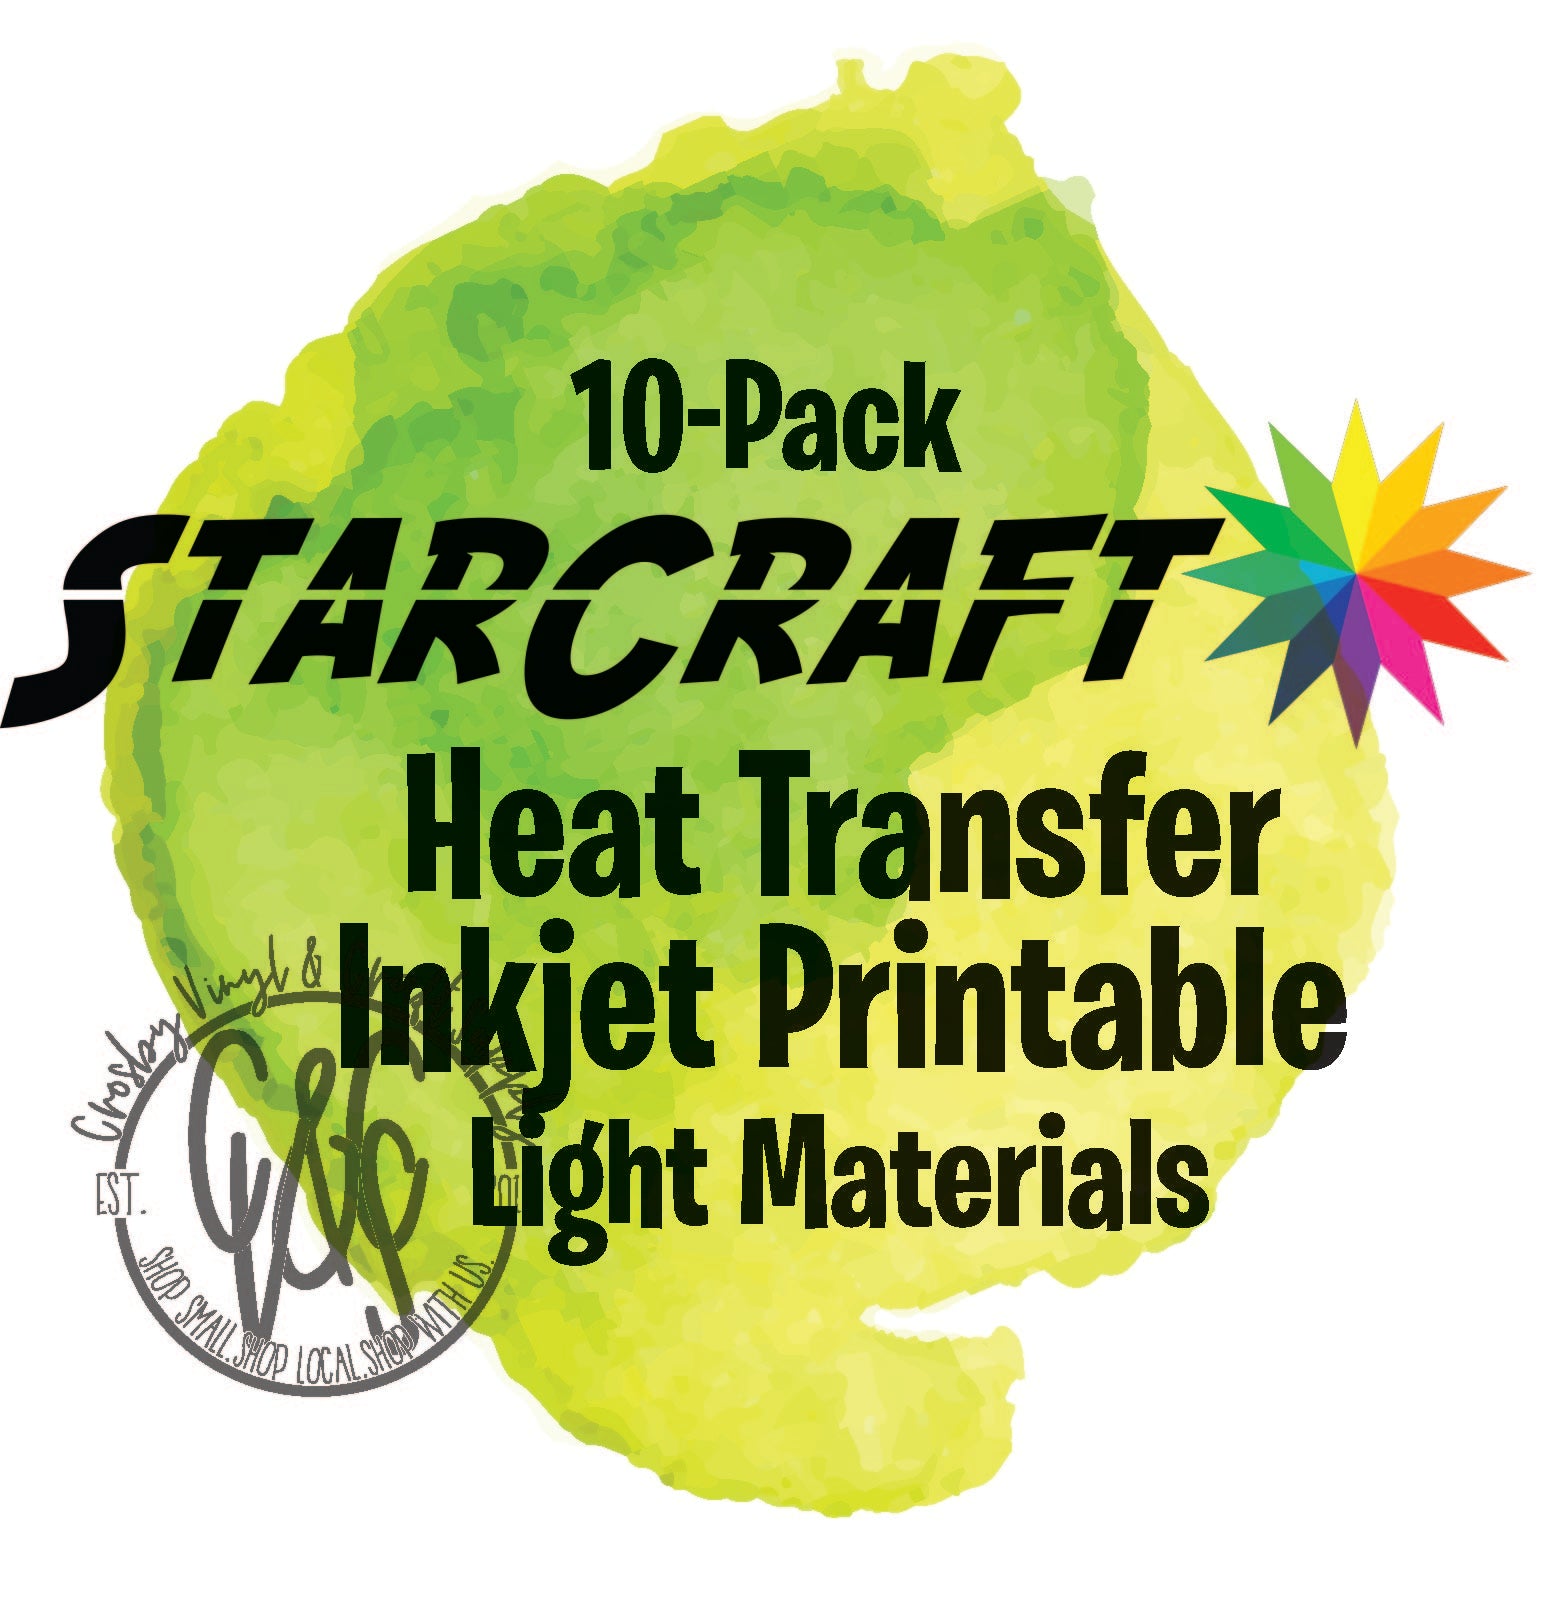 StarCraft Inkjet Printable Heat Transfers for Dark Materials - 8.5 x 11  sheets - 10 pack